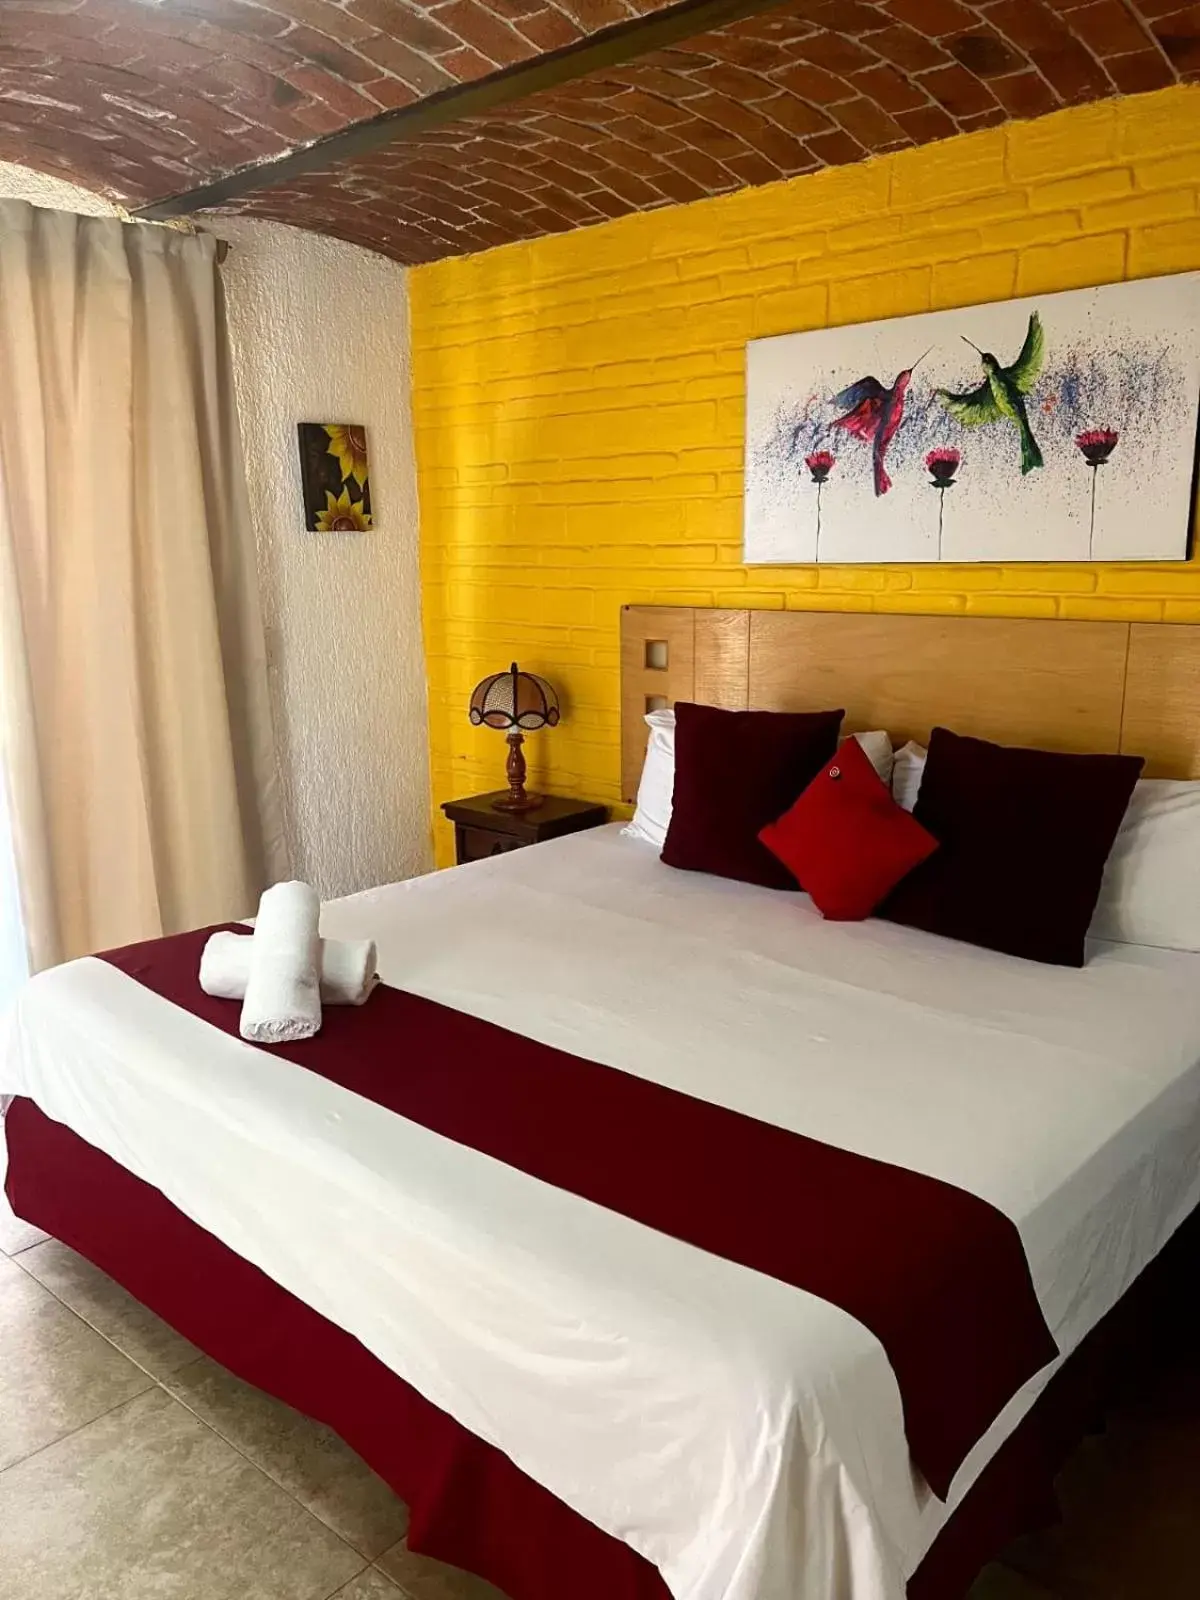 Bedroom, Bed in Hotel Villas Ajijic, Ajijic Chapala Jalisco